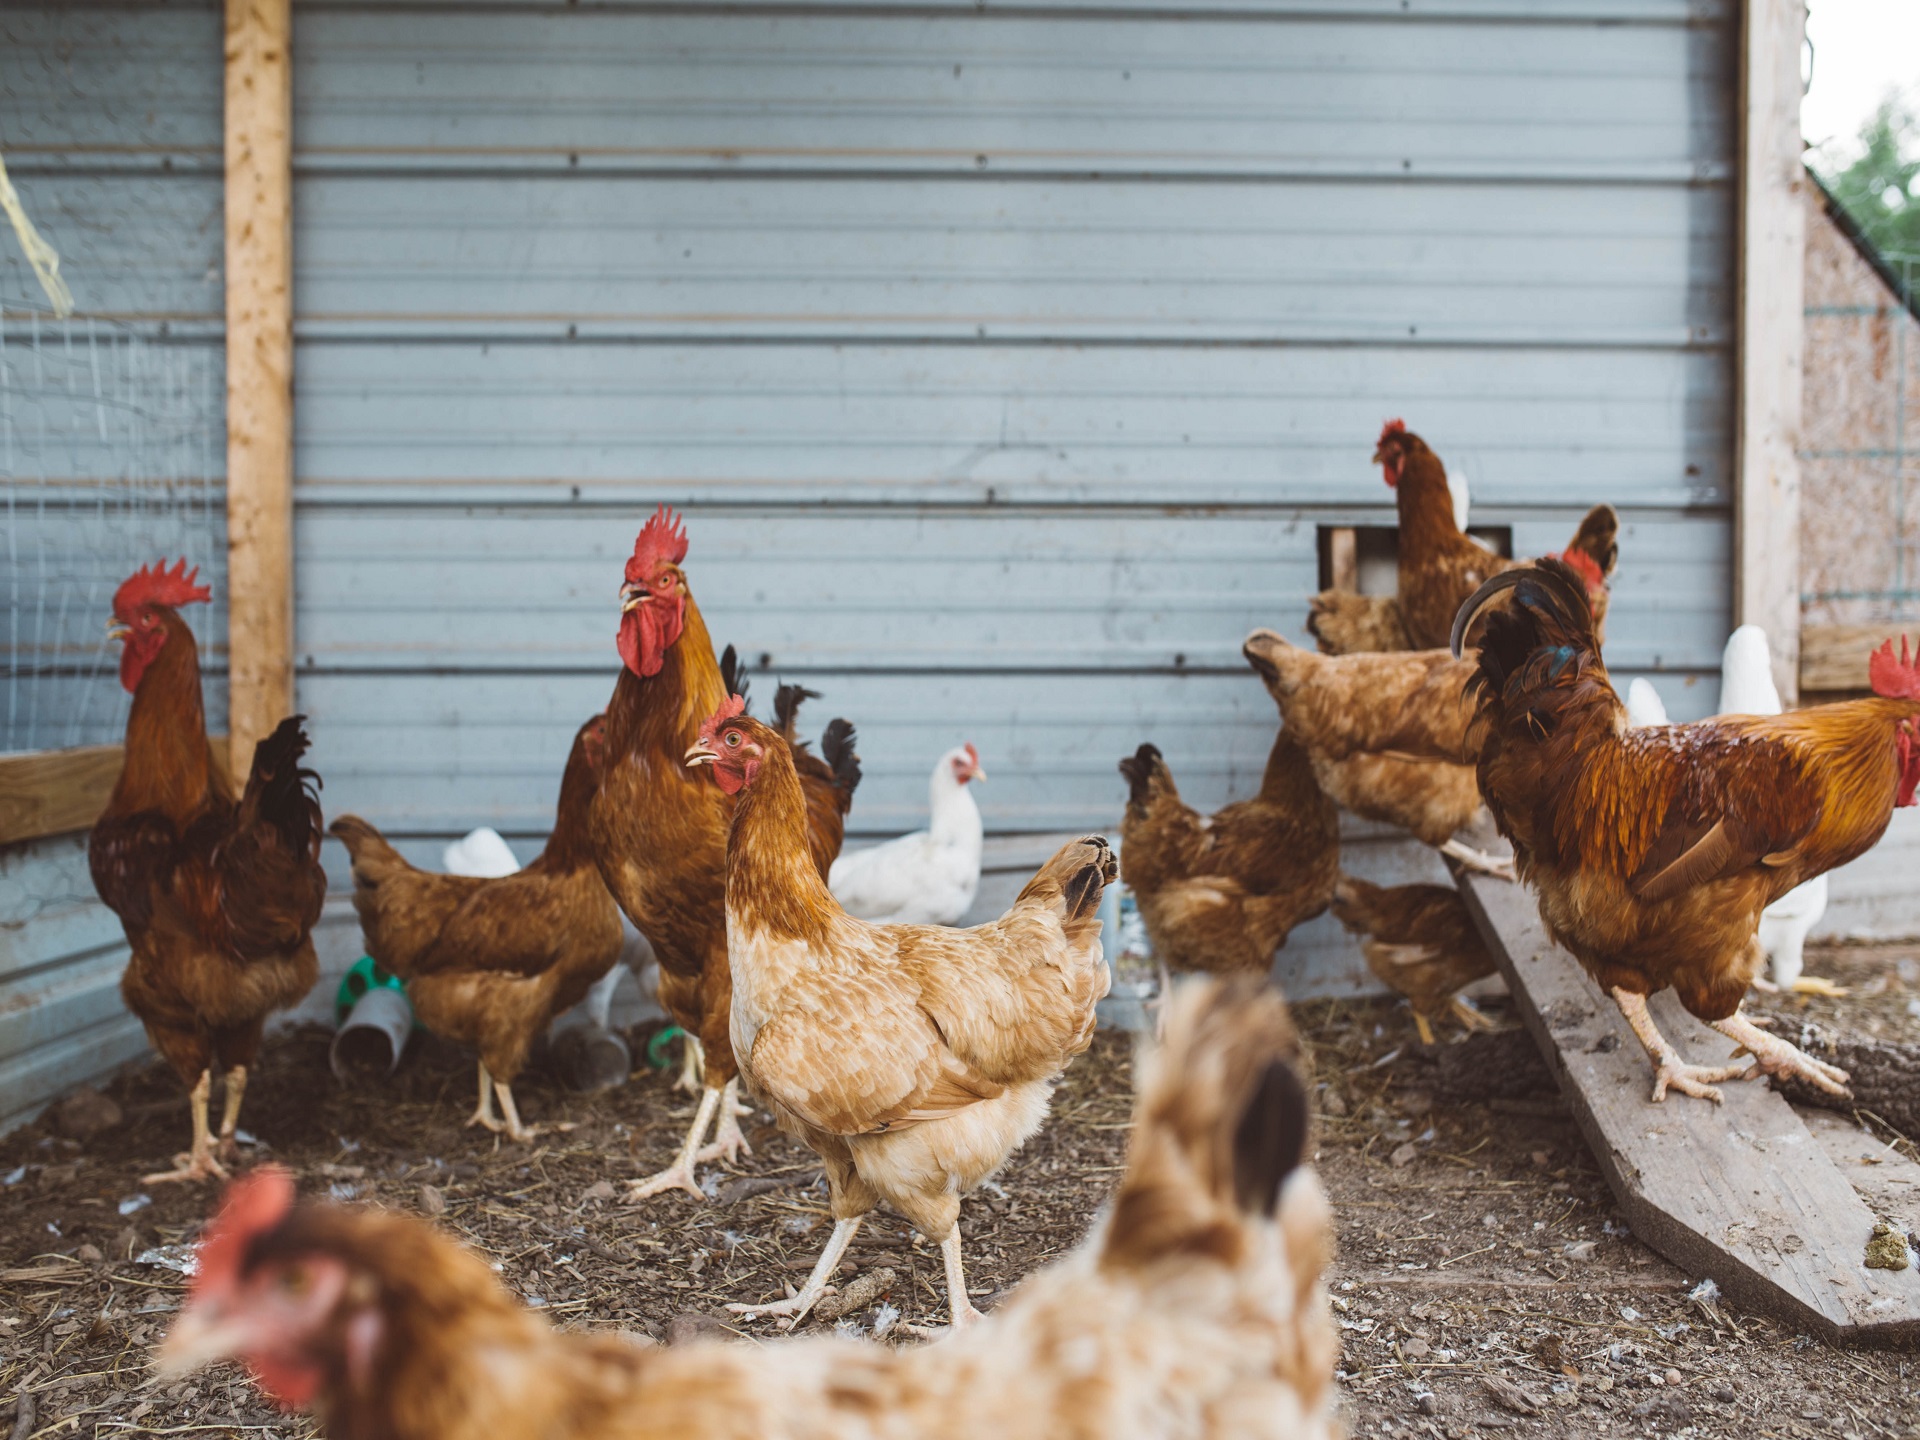 Poultry & Farm Animal